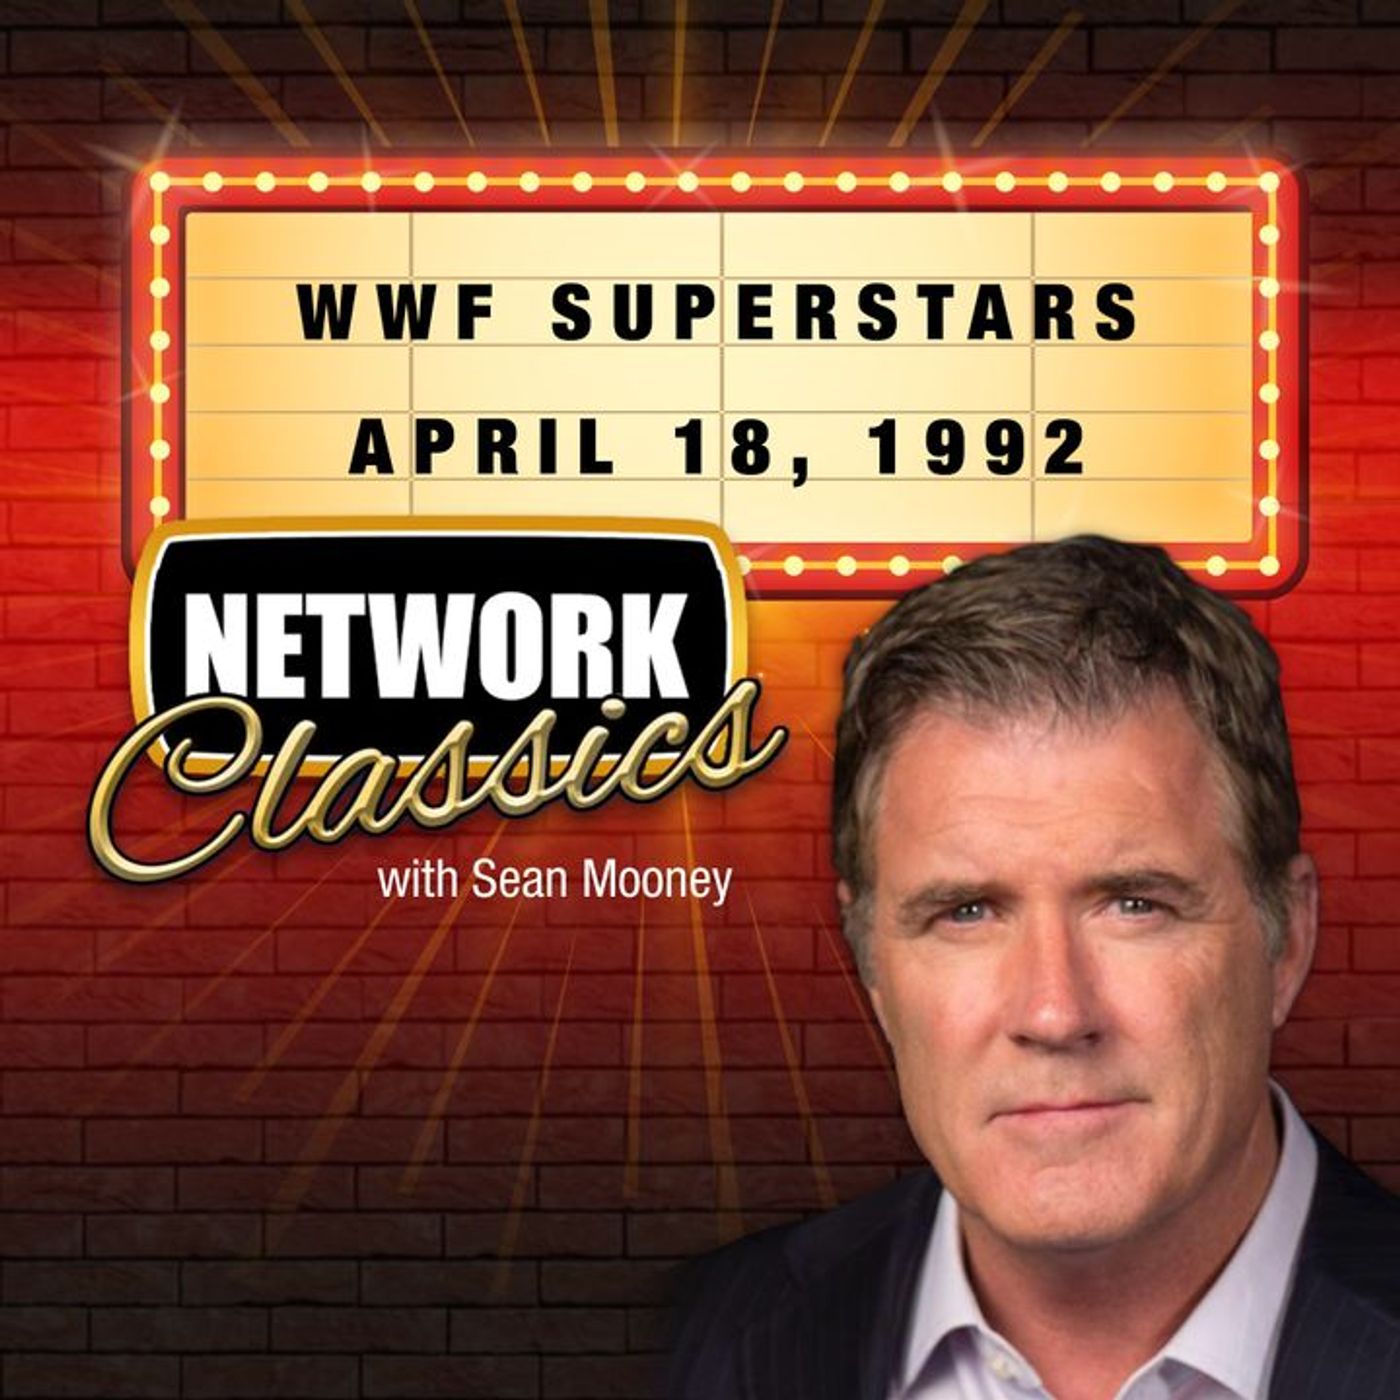 Network Classics: WWF Superstars April 18, 1992: PRIME TIME VAULT